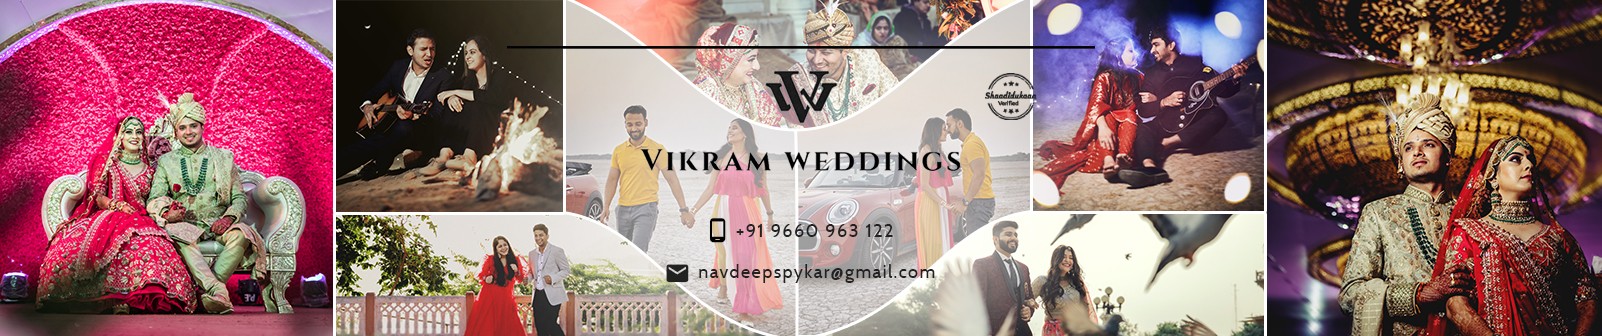 vikram-weddings